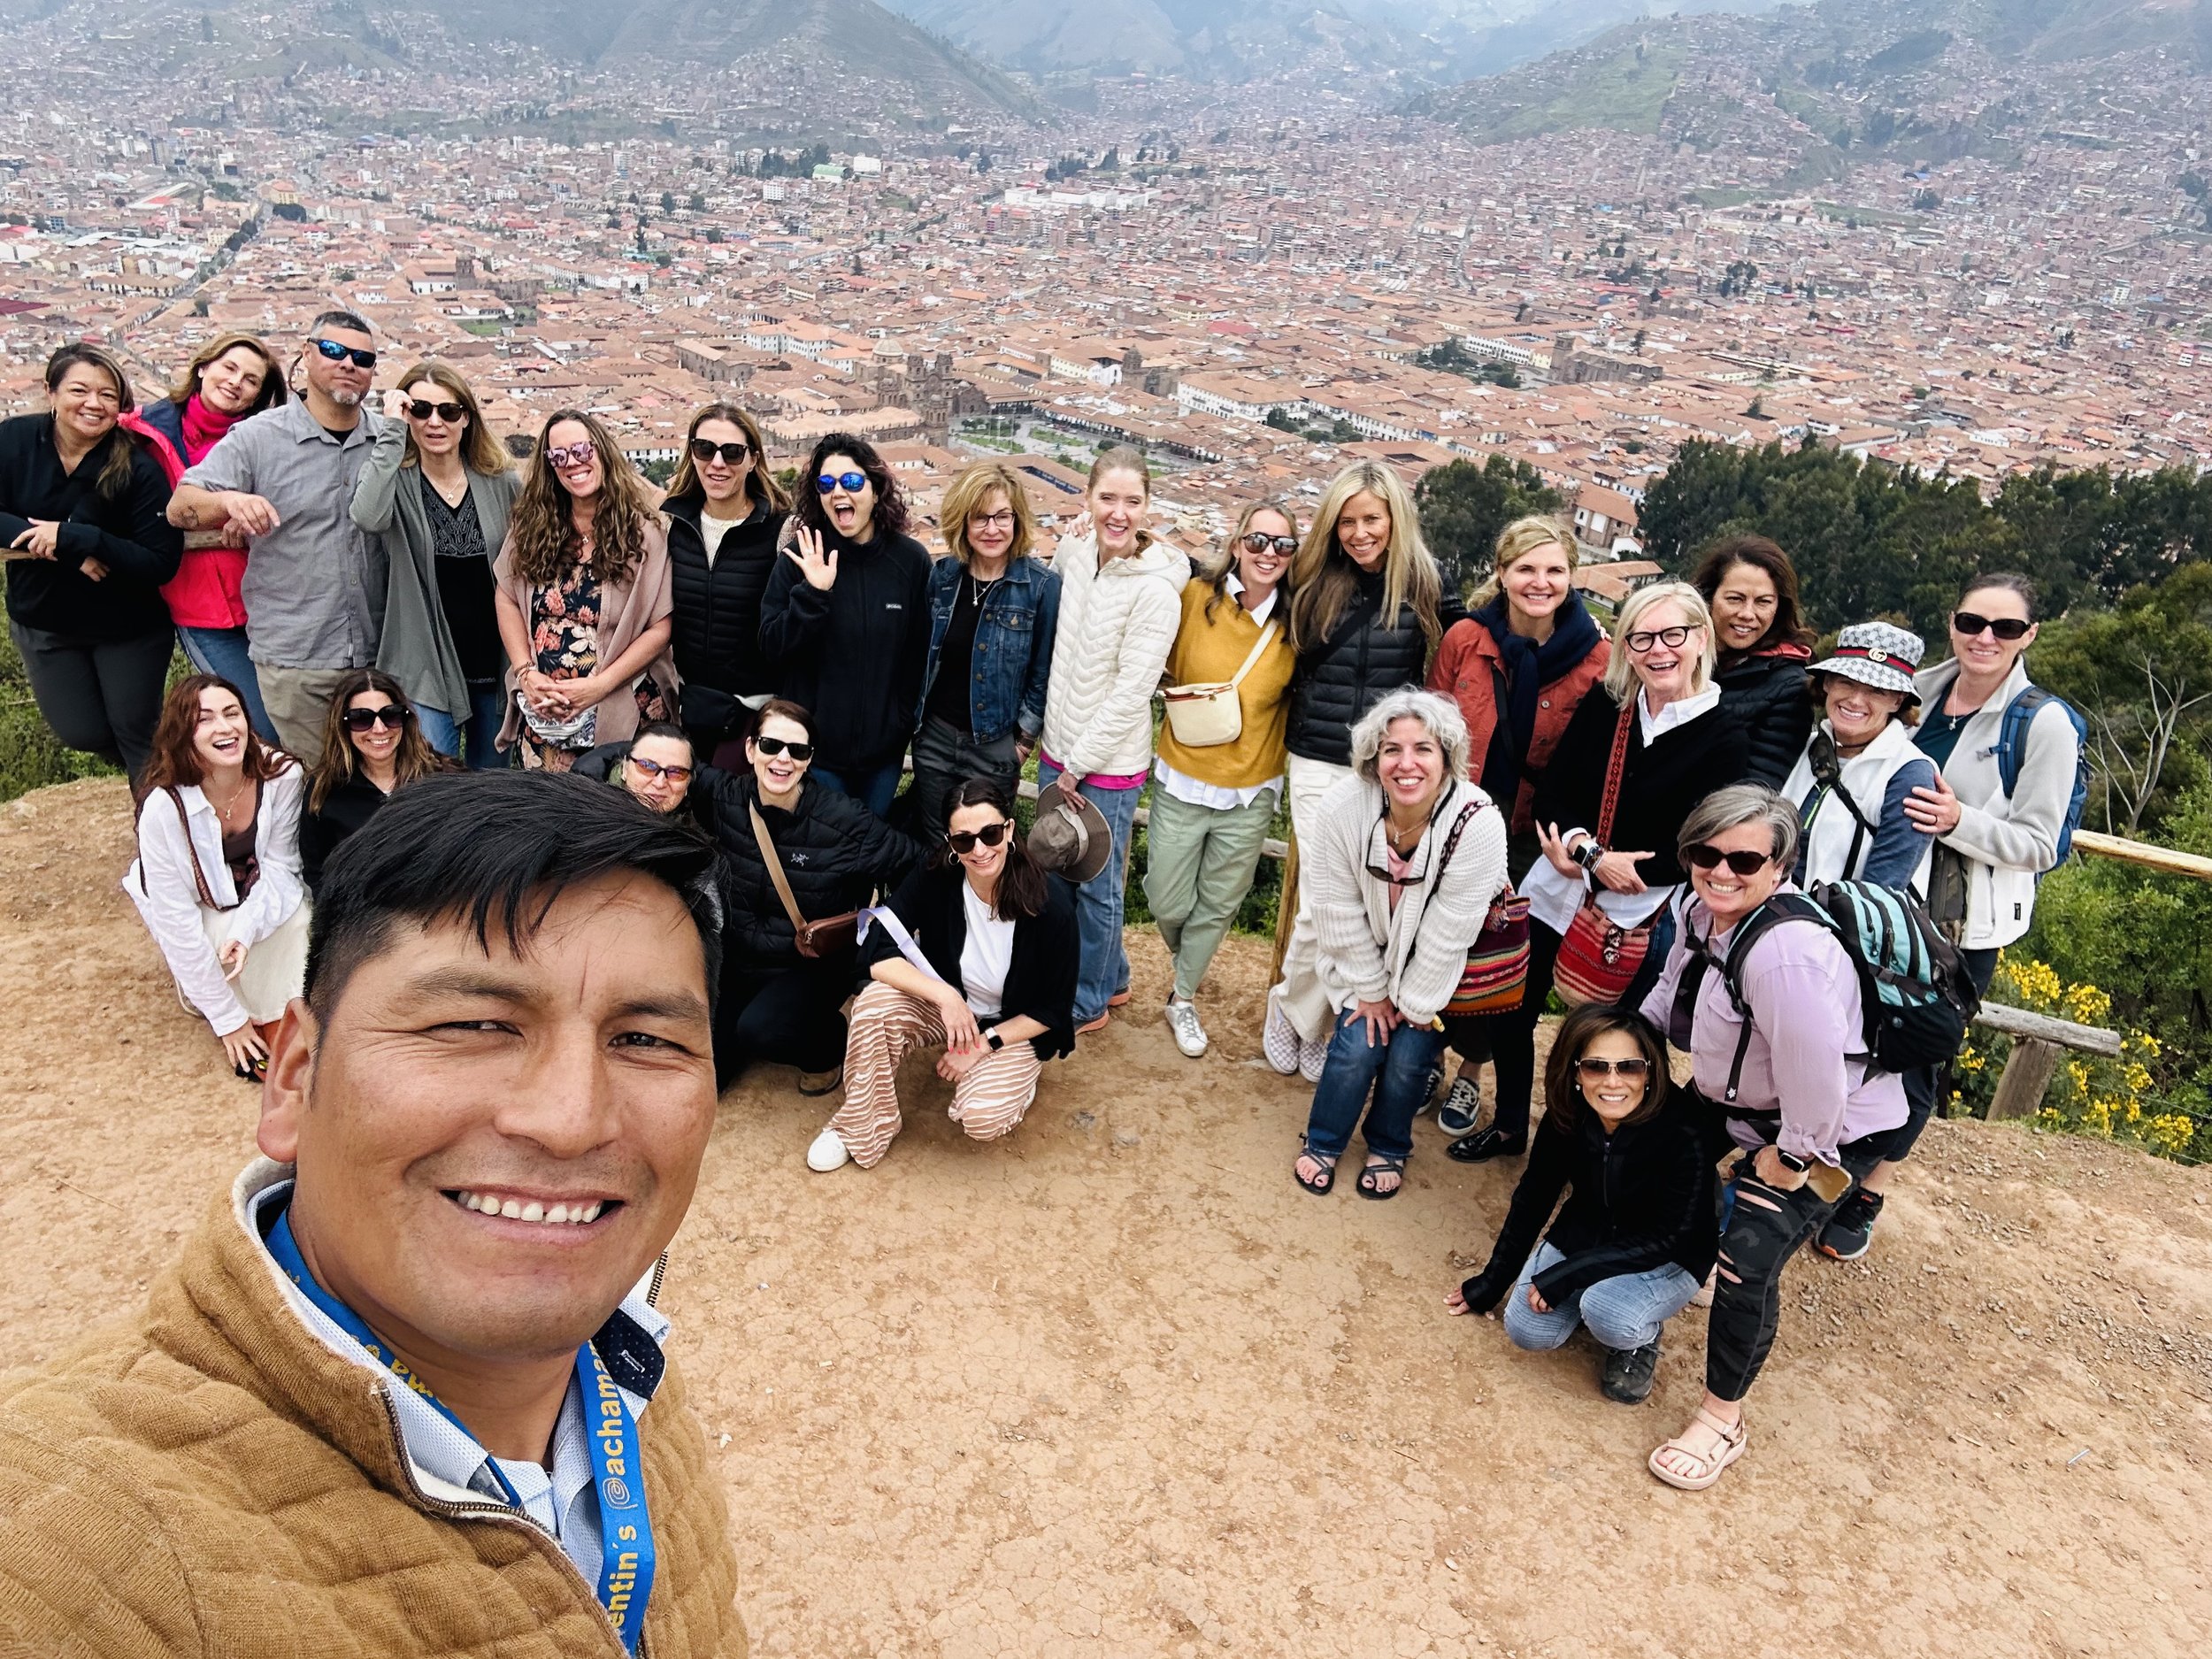 Sacsayhuaman group photo, Cusco view, Peru.jpg